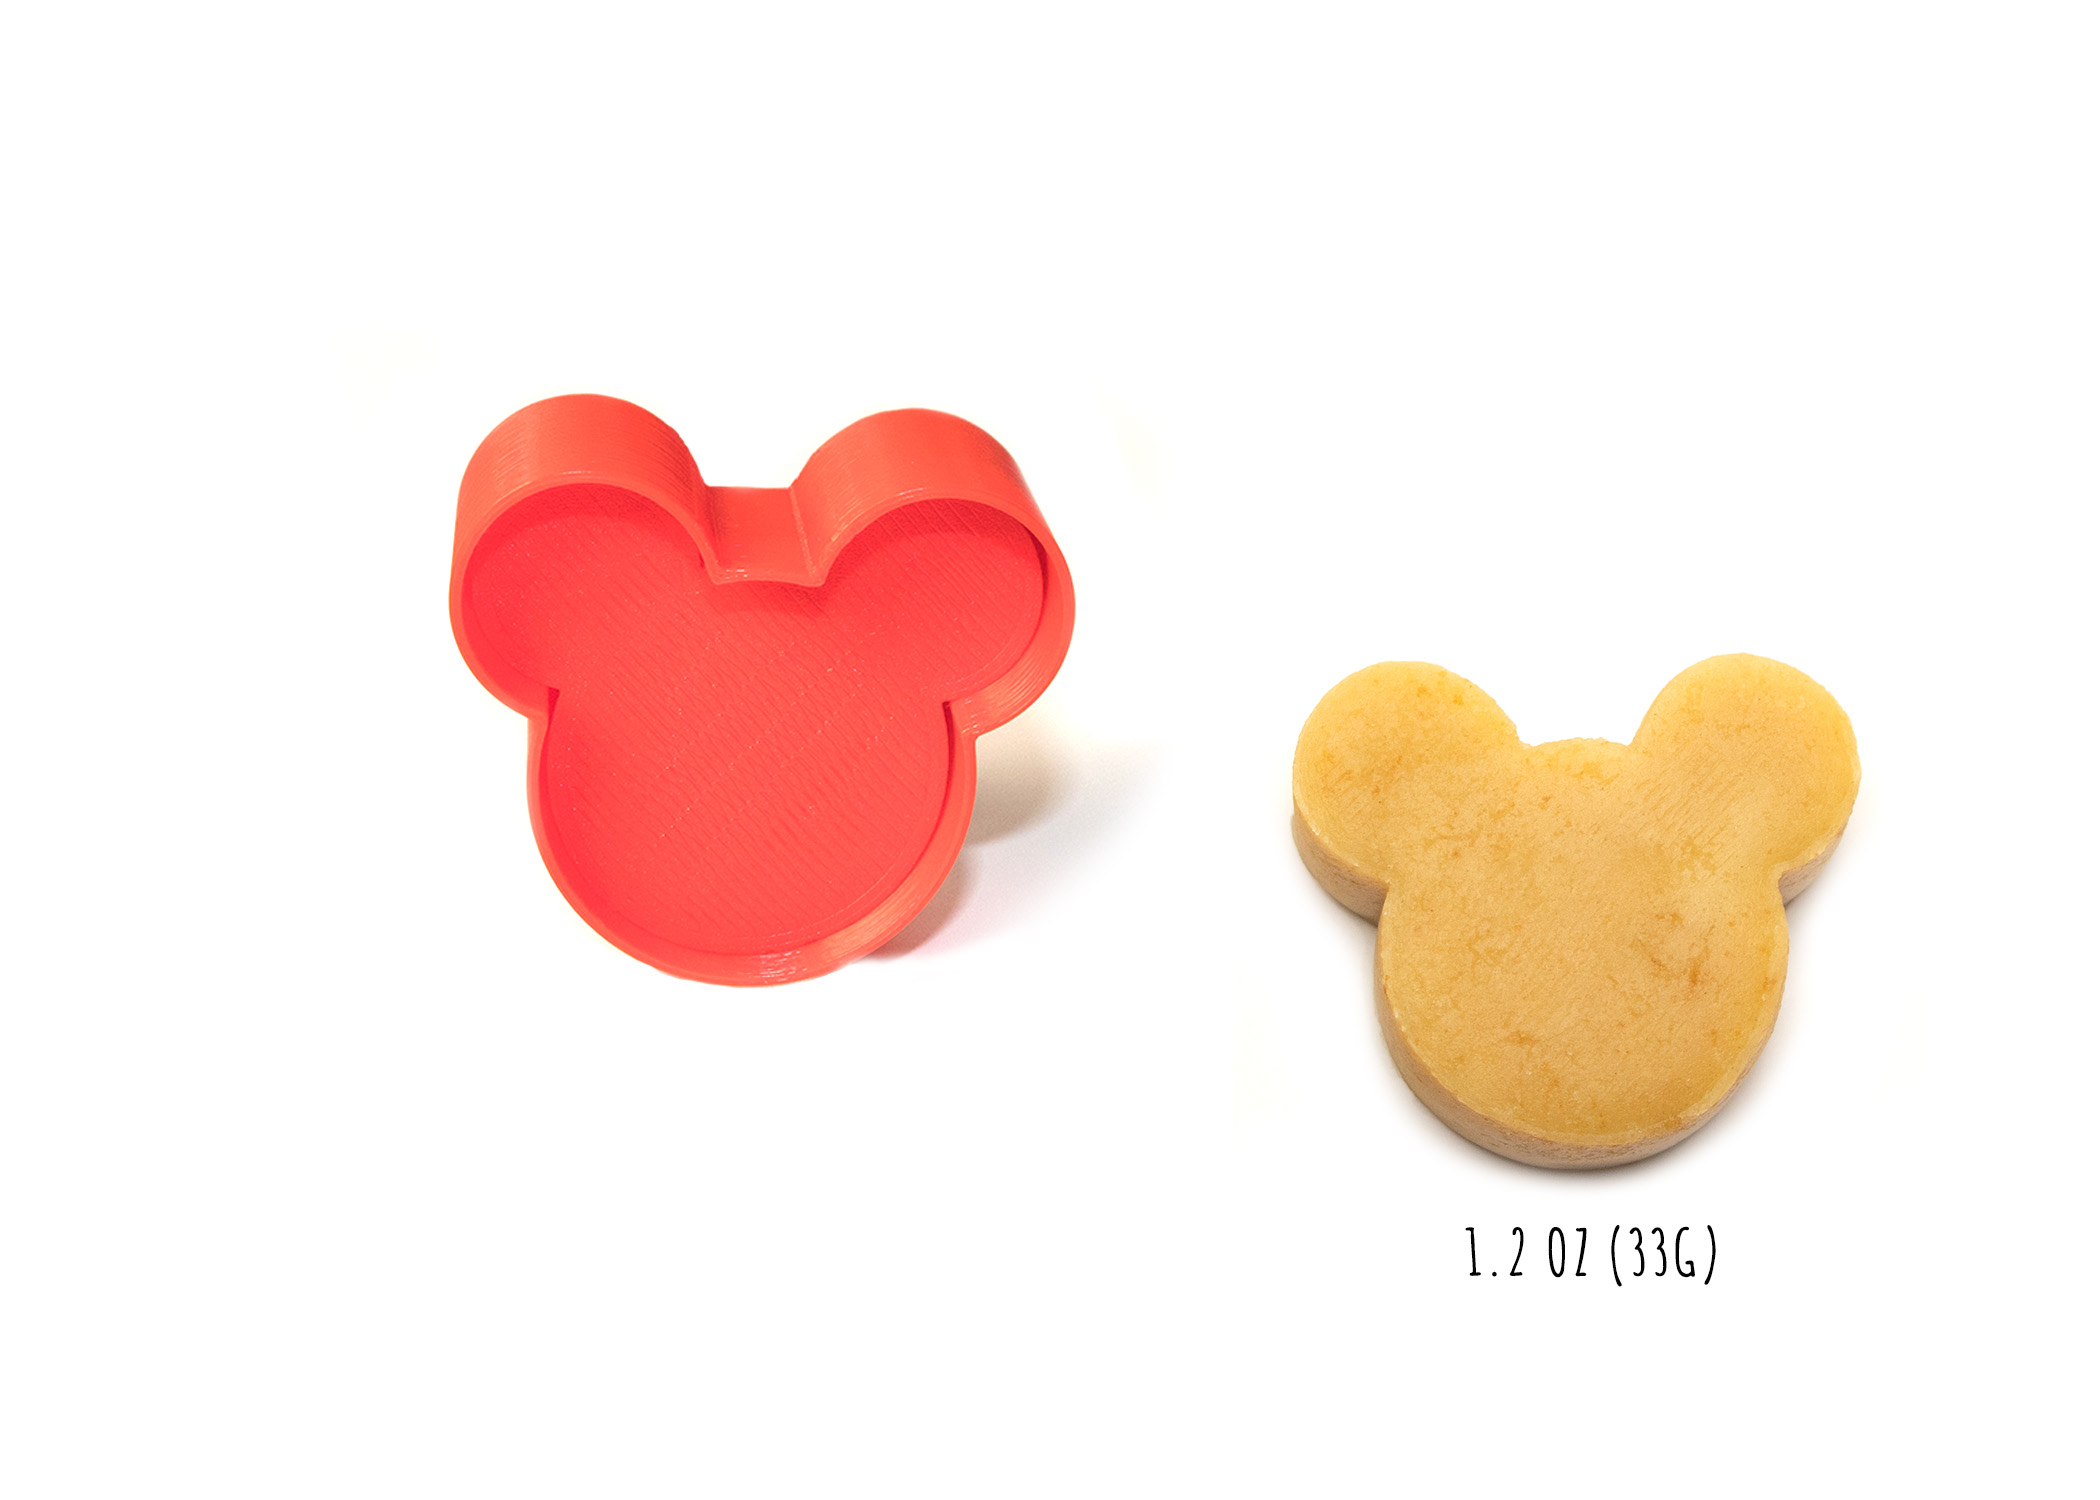 Cakepop Stamps Heart - Bread Stamps